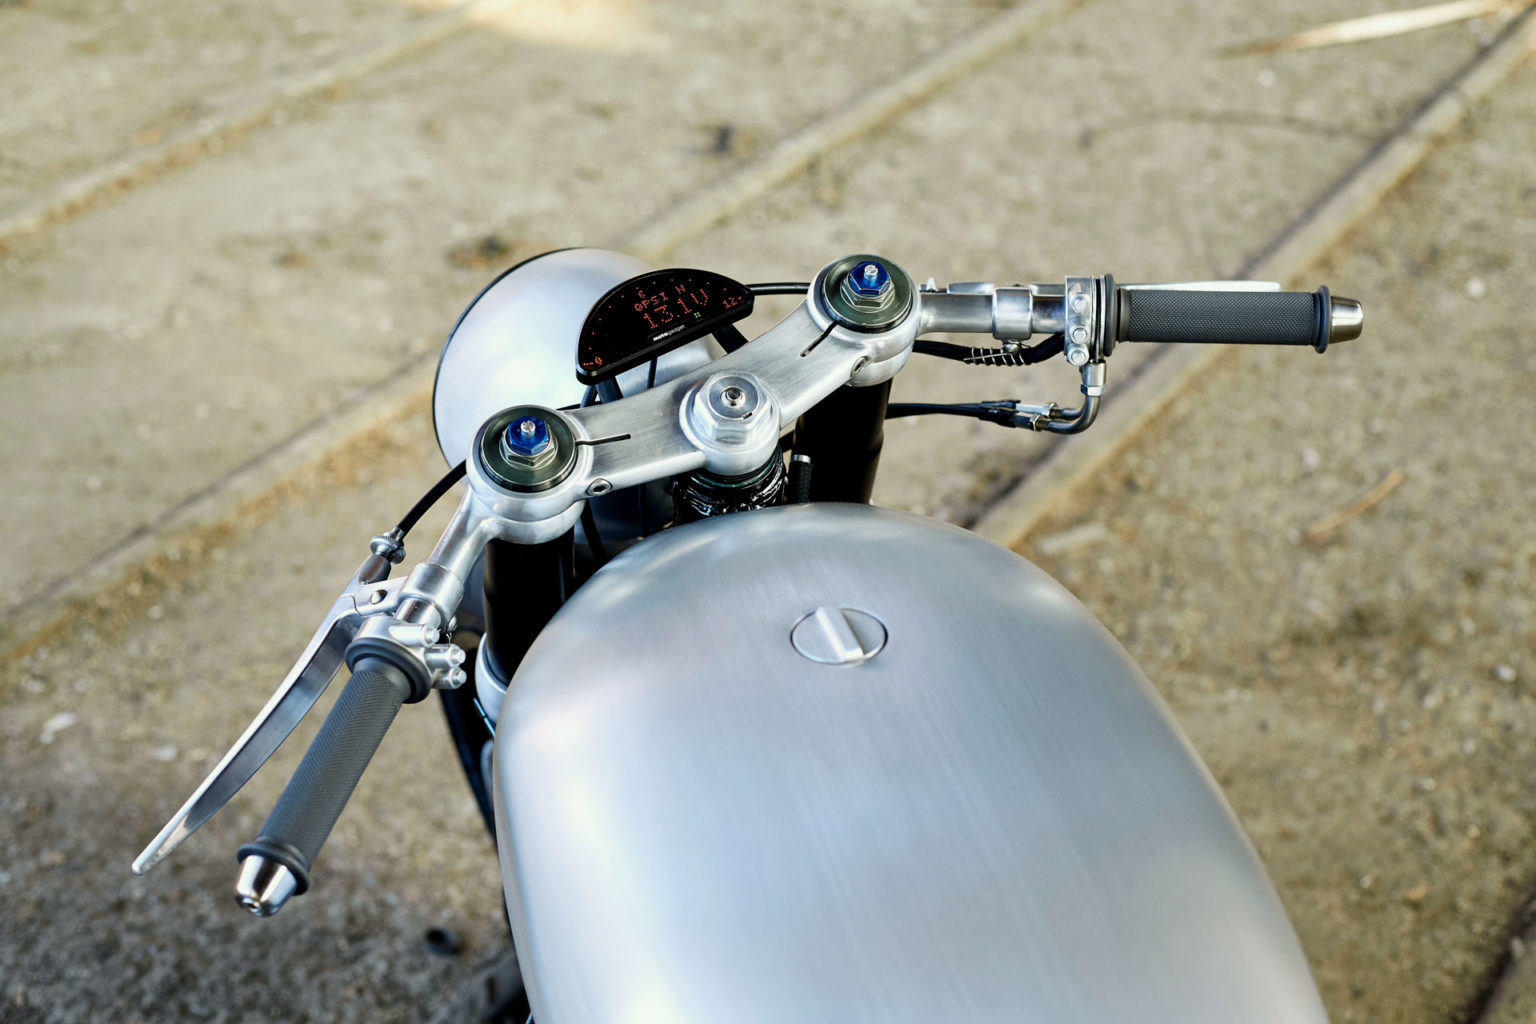 Honda CB750 by MessnerMoto